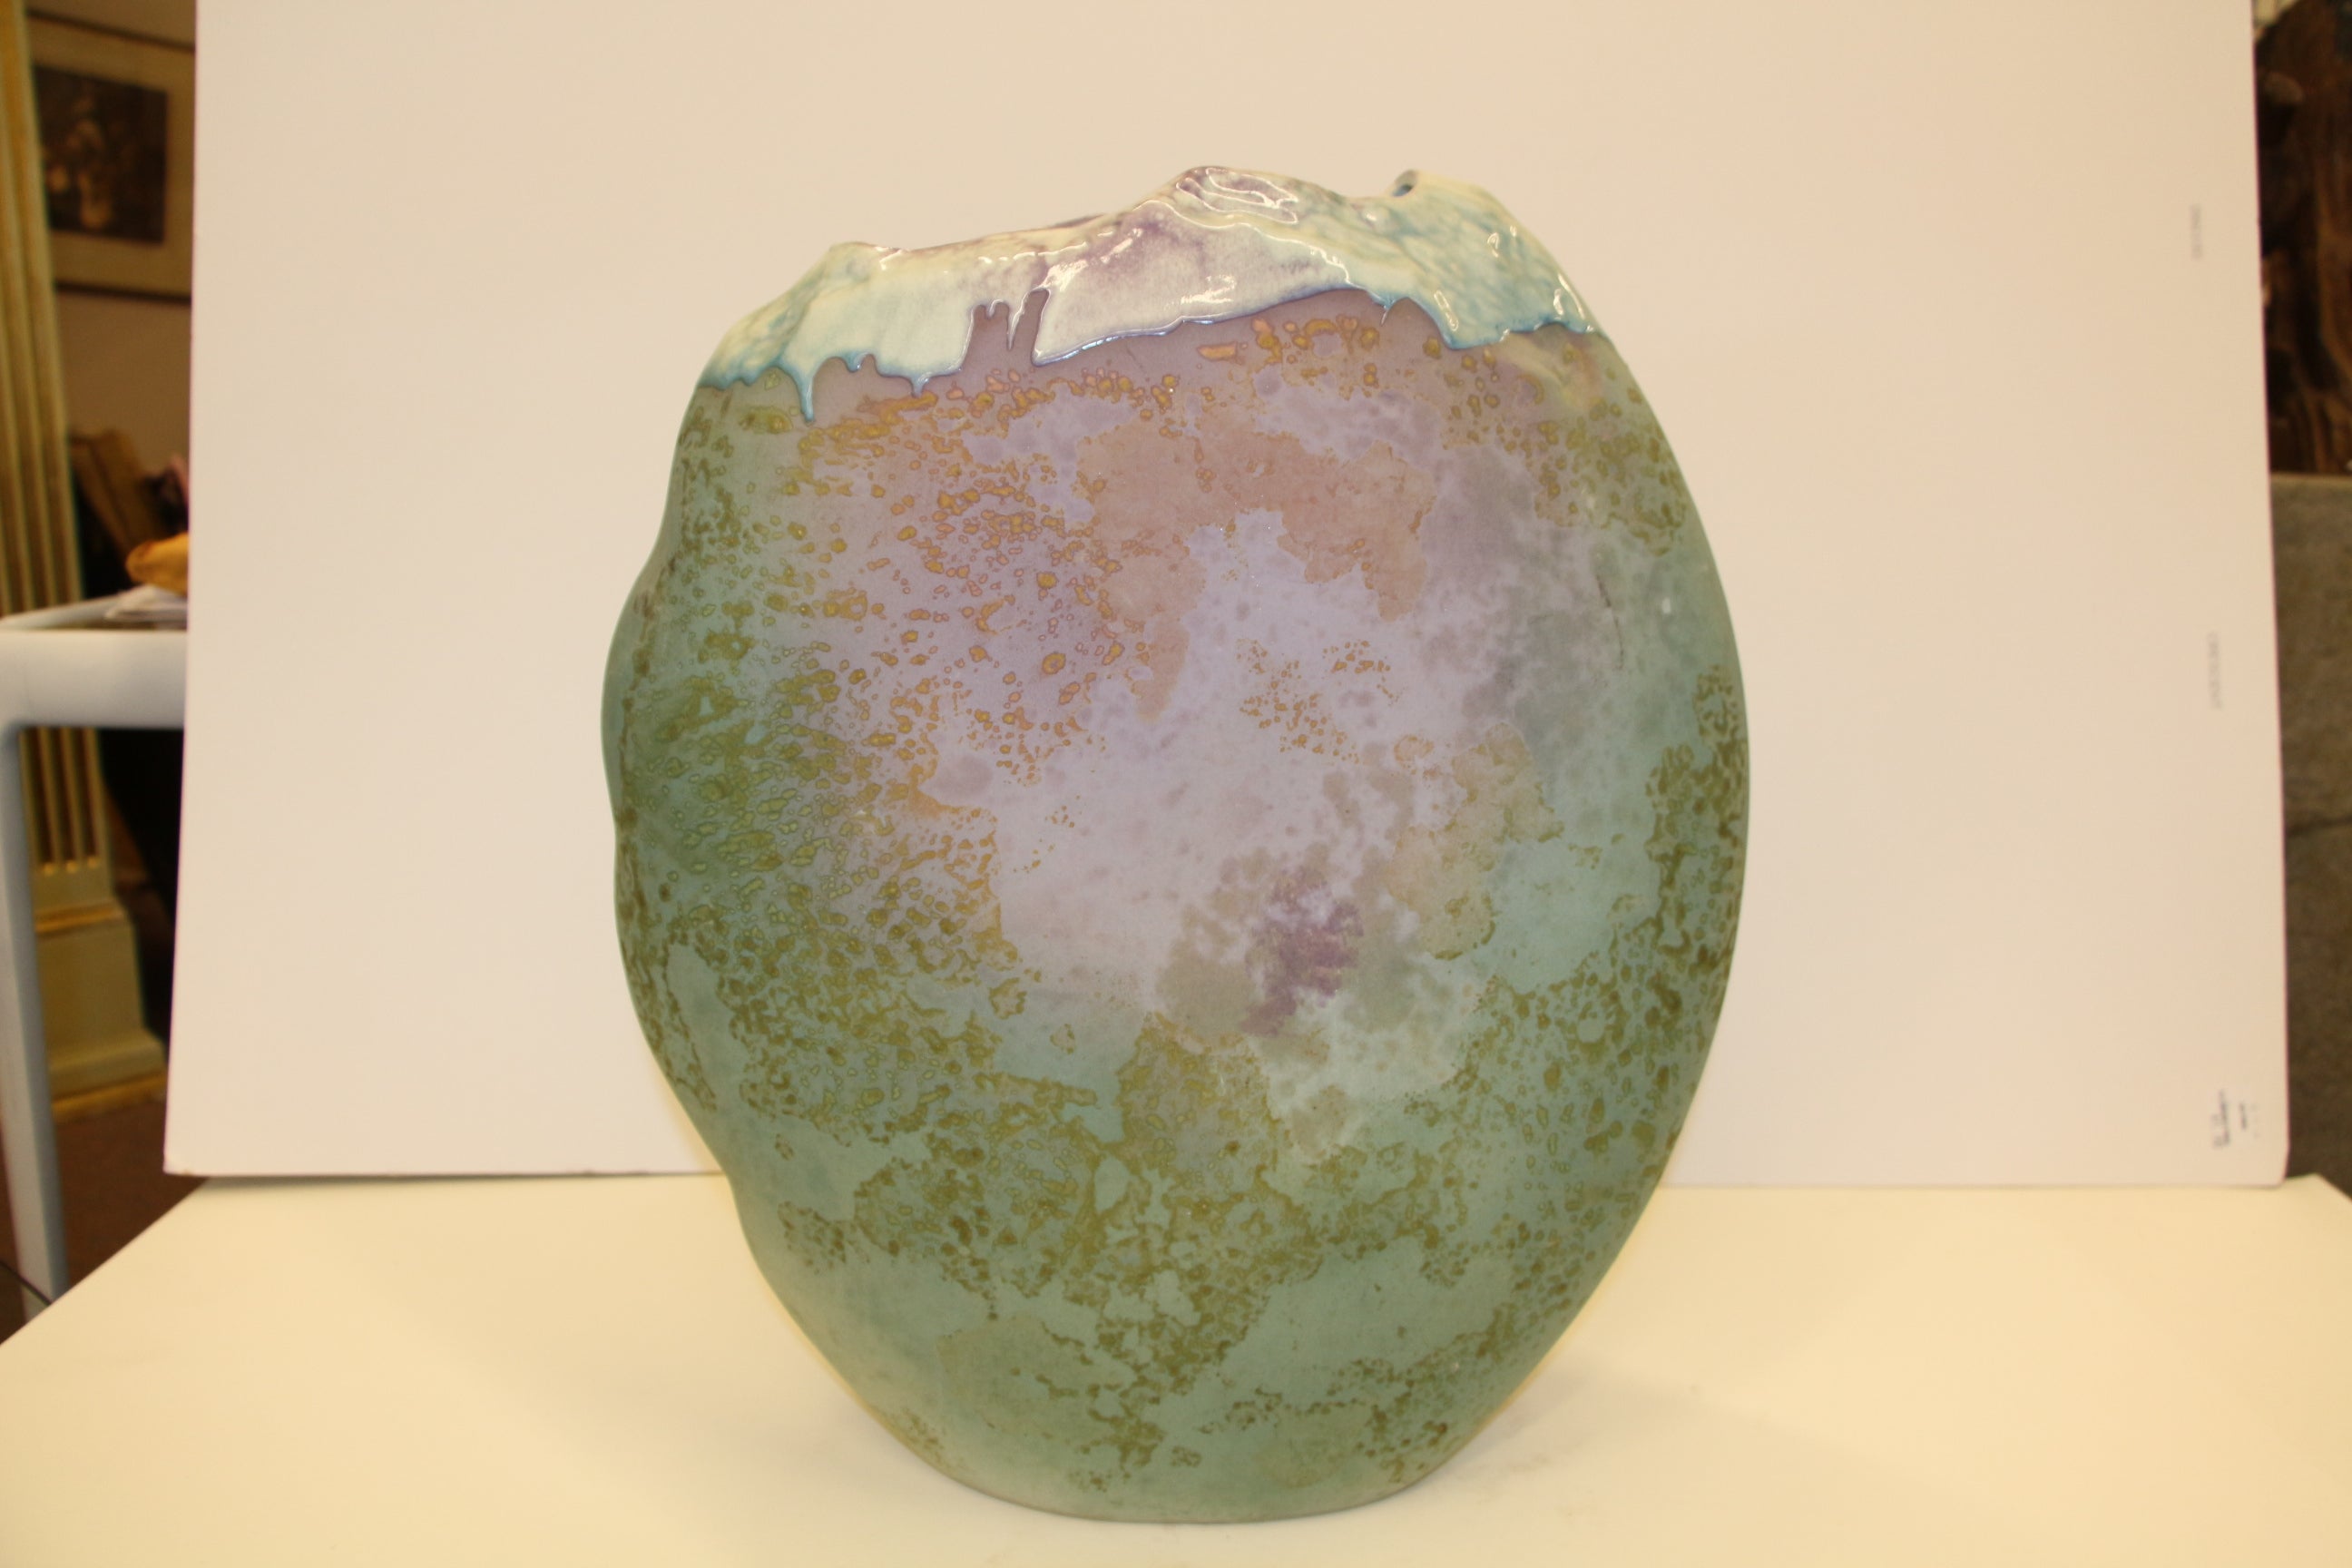 Large Tony Evans raku fired pottery vase